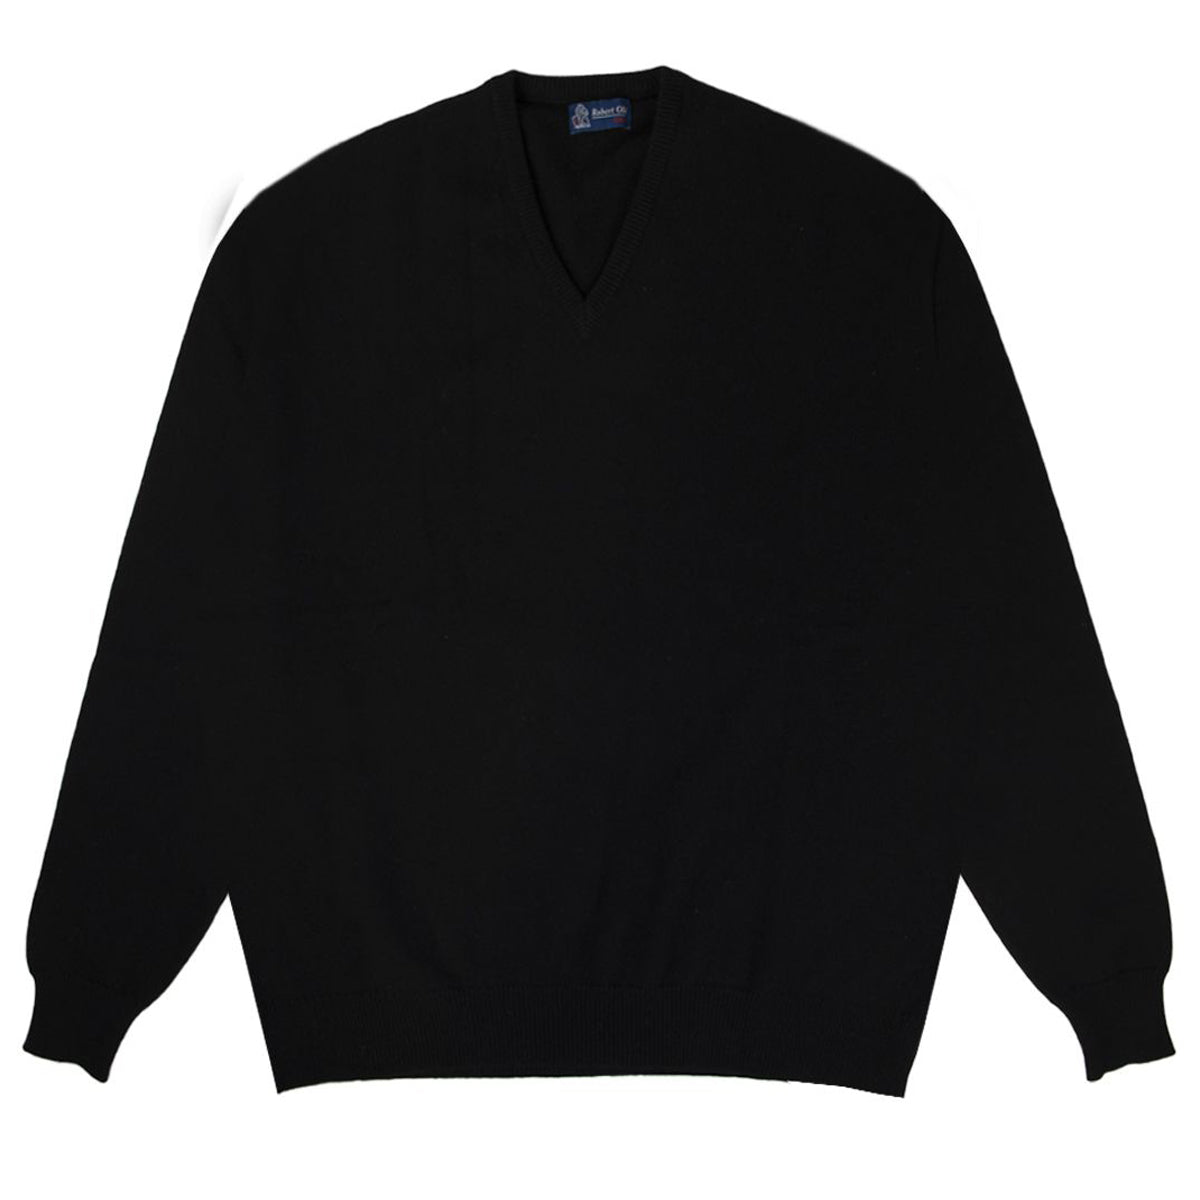 Black Tobermorey 4ply V-Neck Cashmere Sweater  Robert Old   